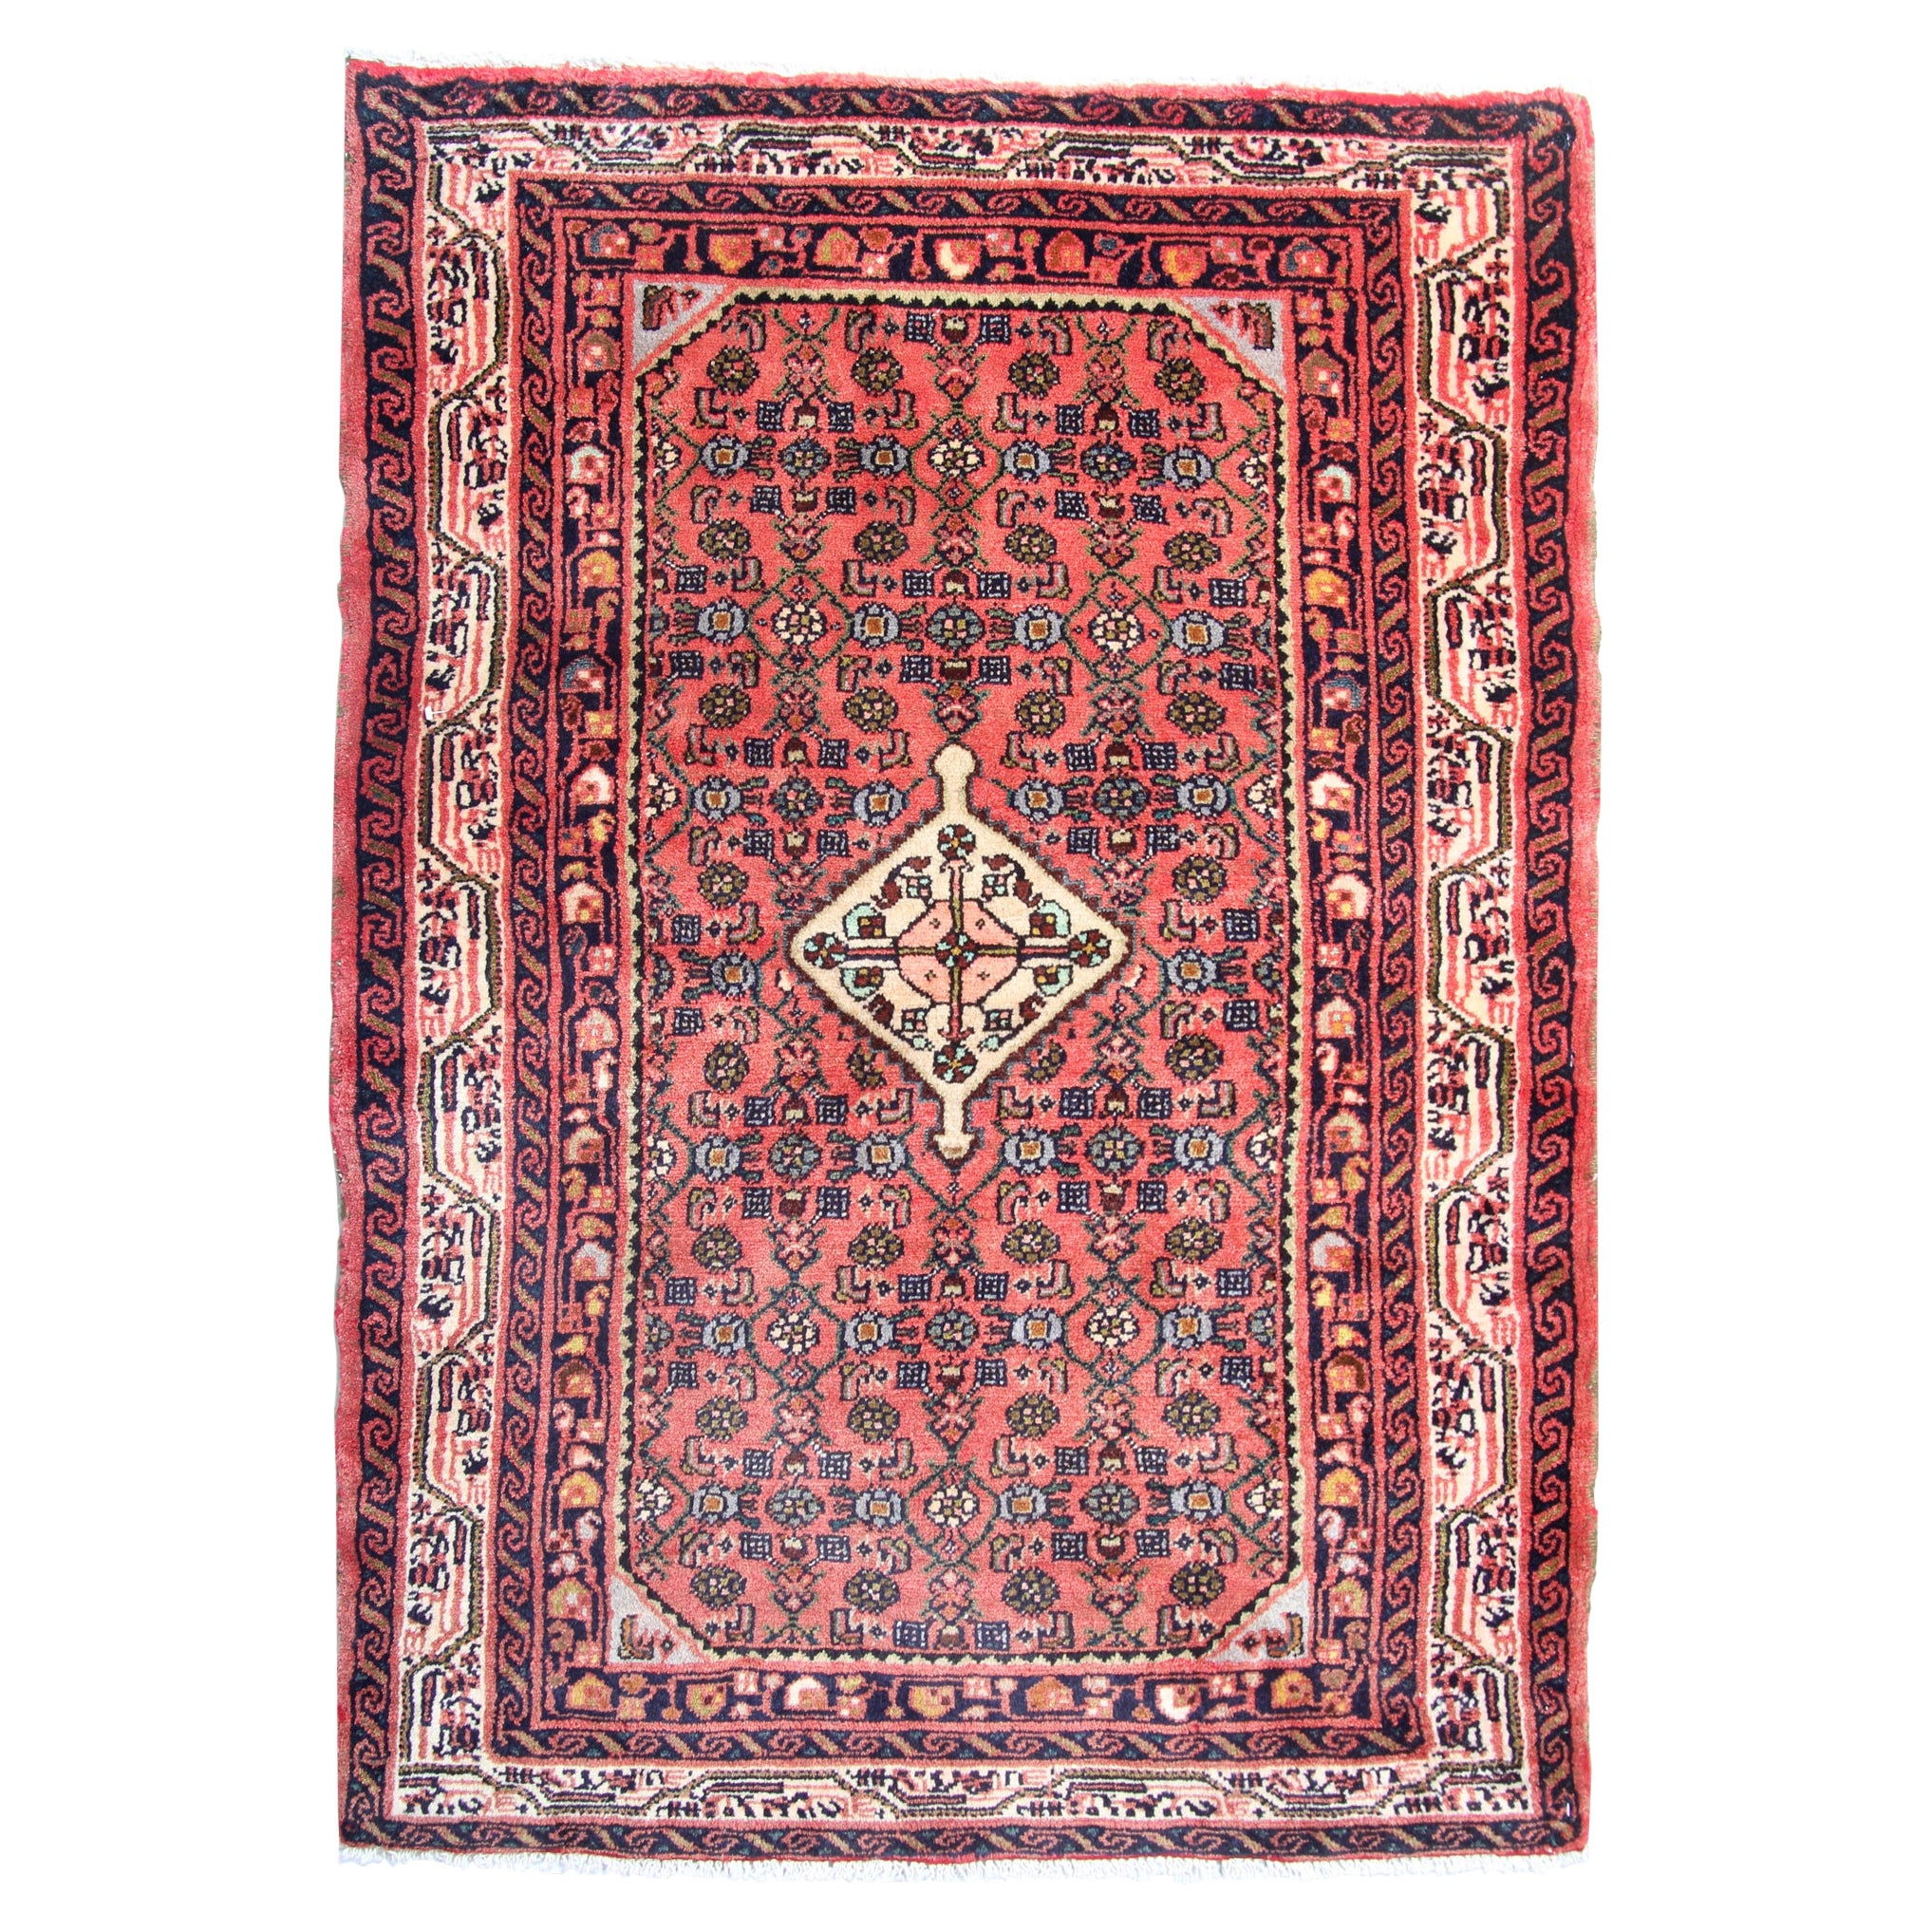 Rustic Vintage Rug Handmade Carpet, Traditional Red Pink Wool Turkish Area Rug